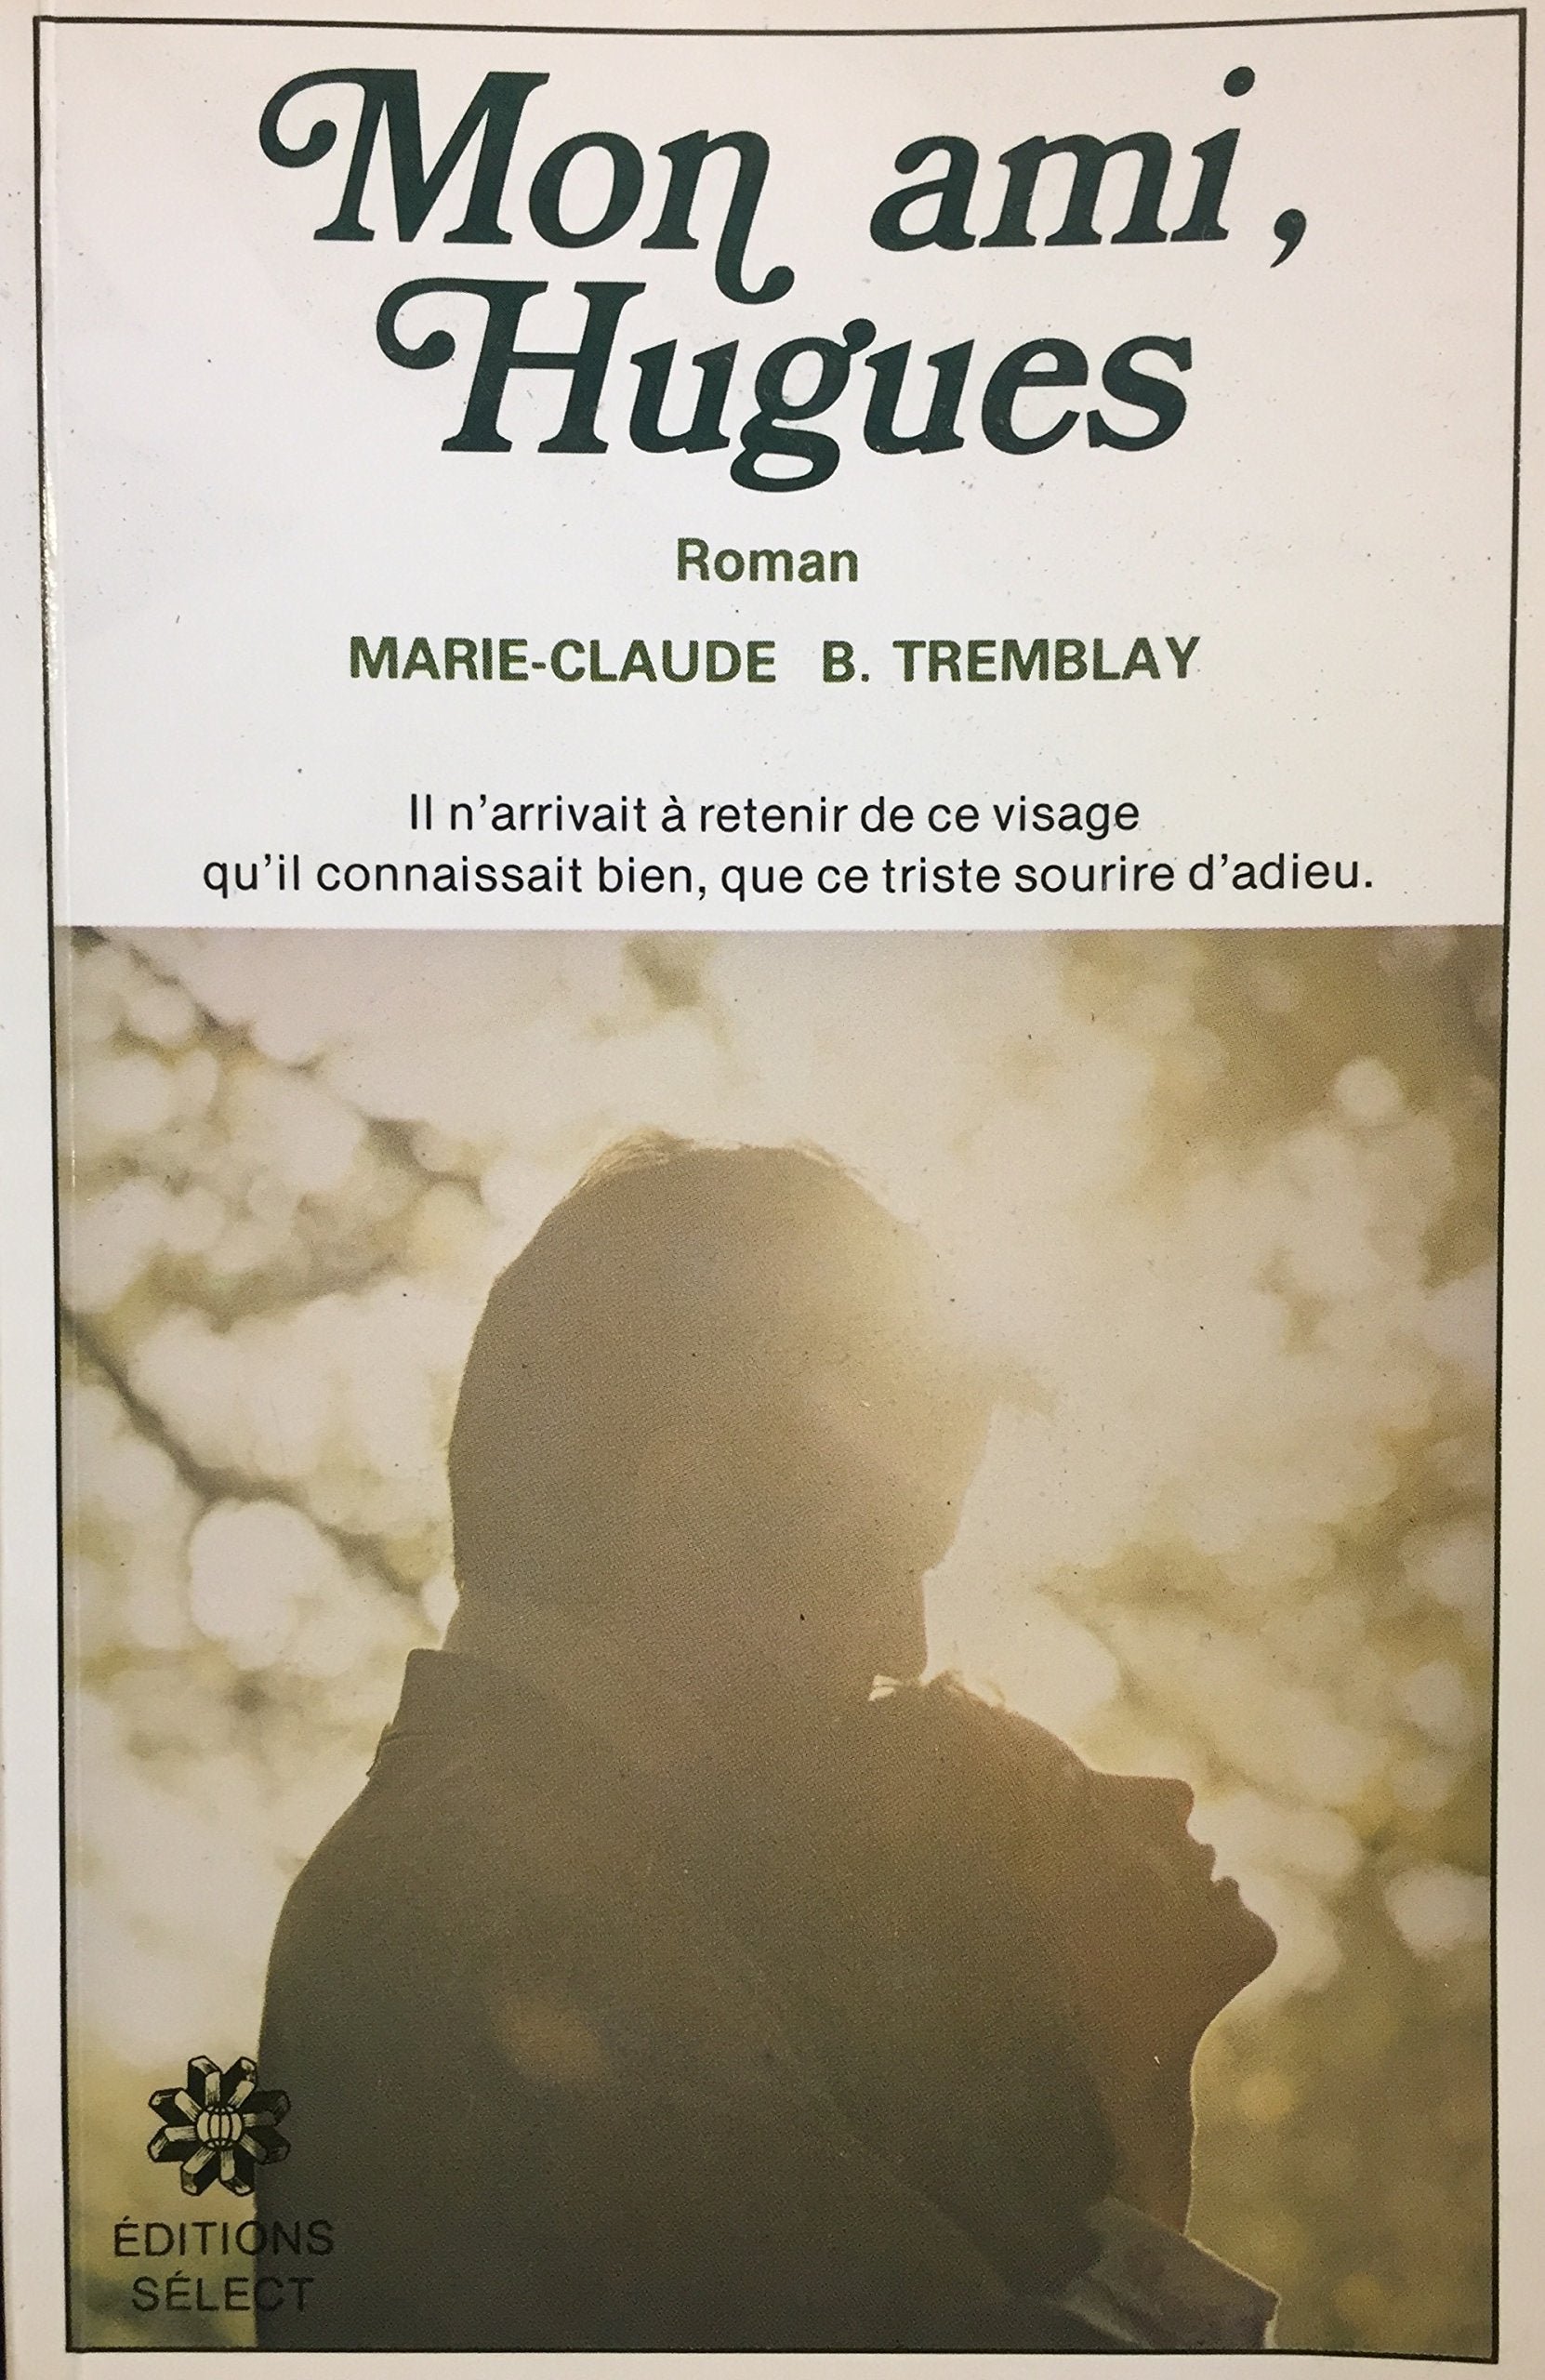 Livre ISBN 2891320476 Mon ami, Hugues (Marie-Claude B. Tremblay)